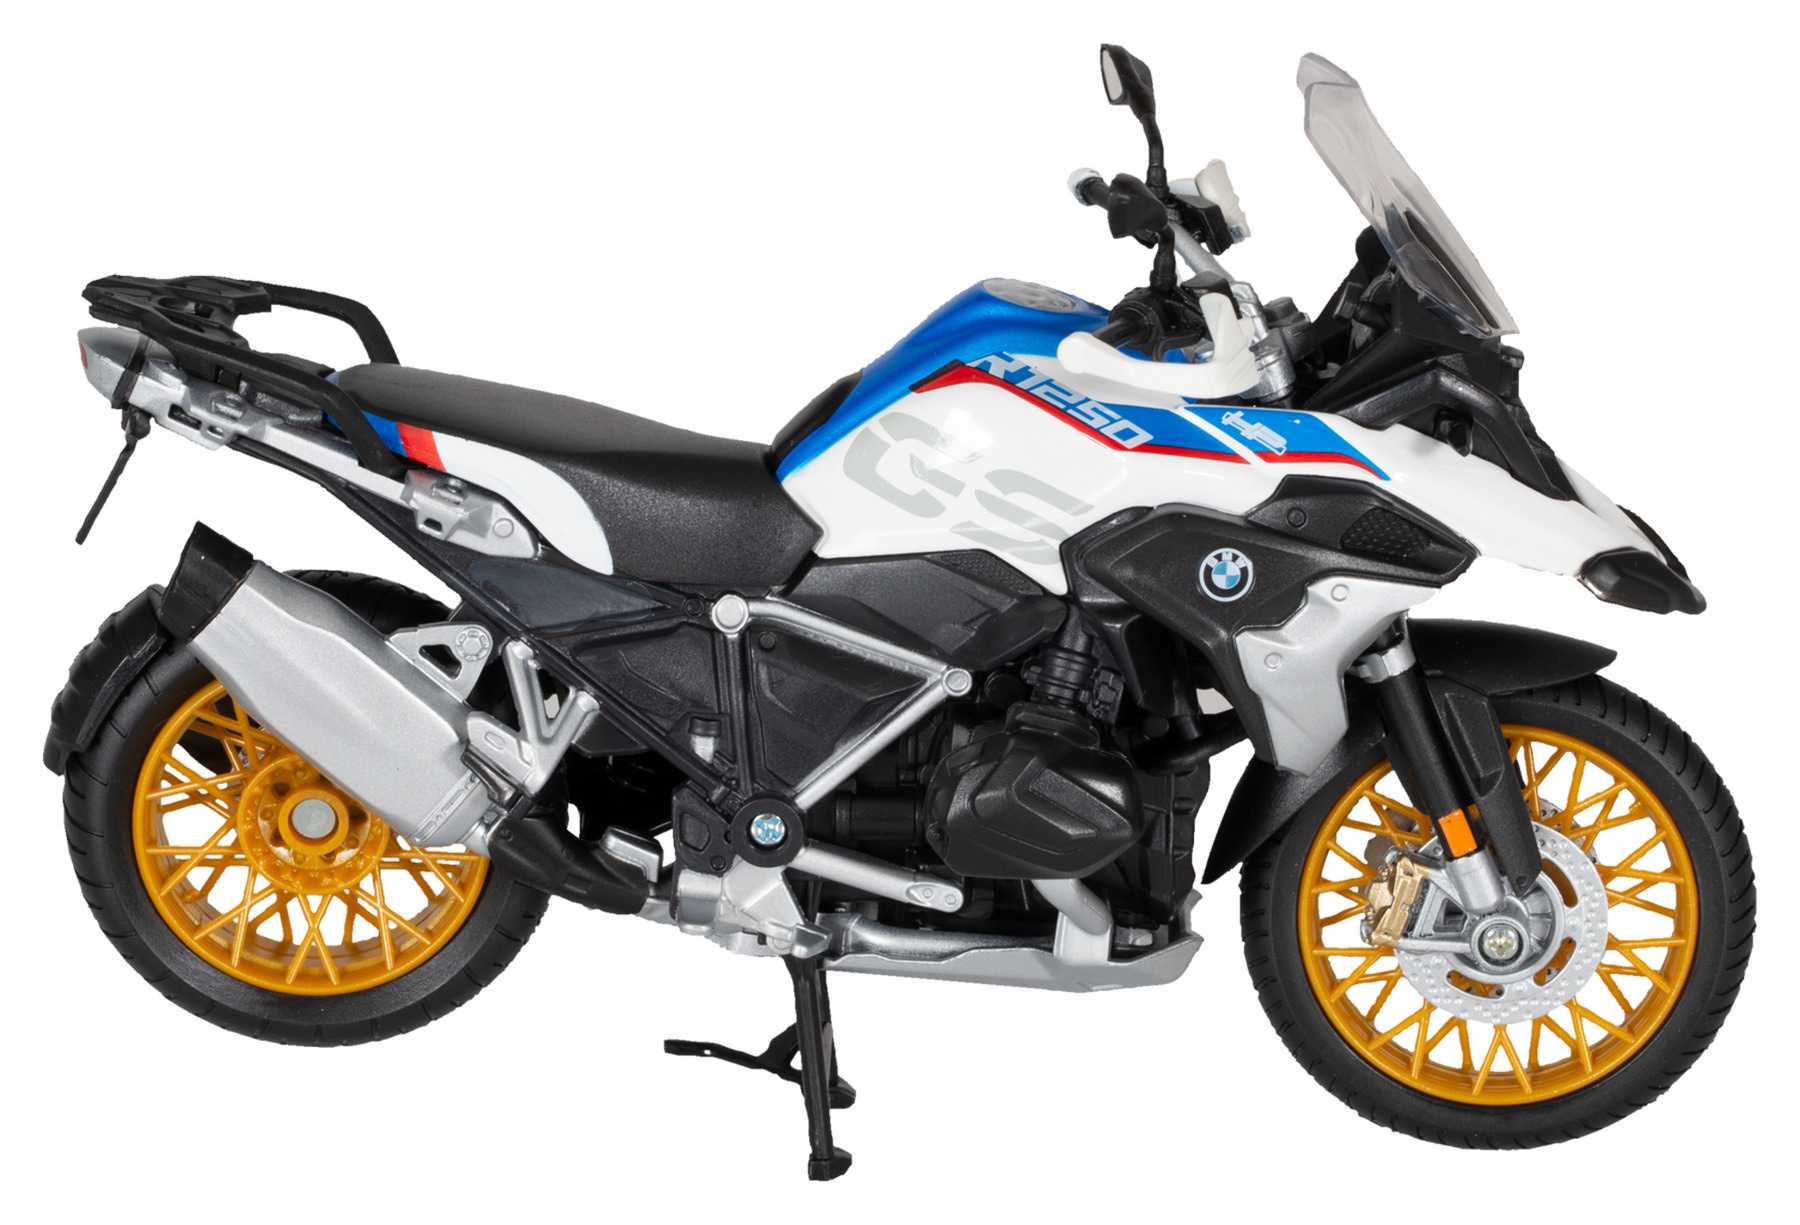 1/18 Scale Maisto BMW R1250GS Travel Enduro Motorcycle Model Toy R 1250 GS Bike 